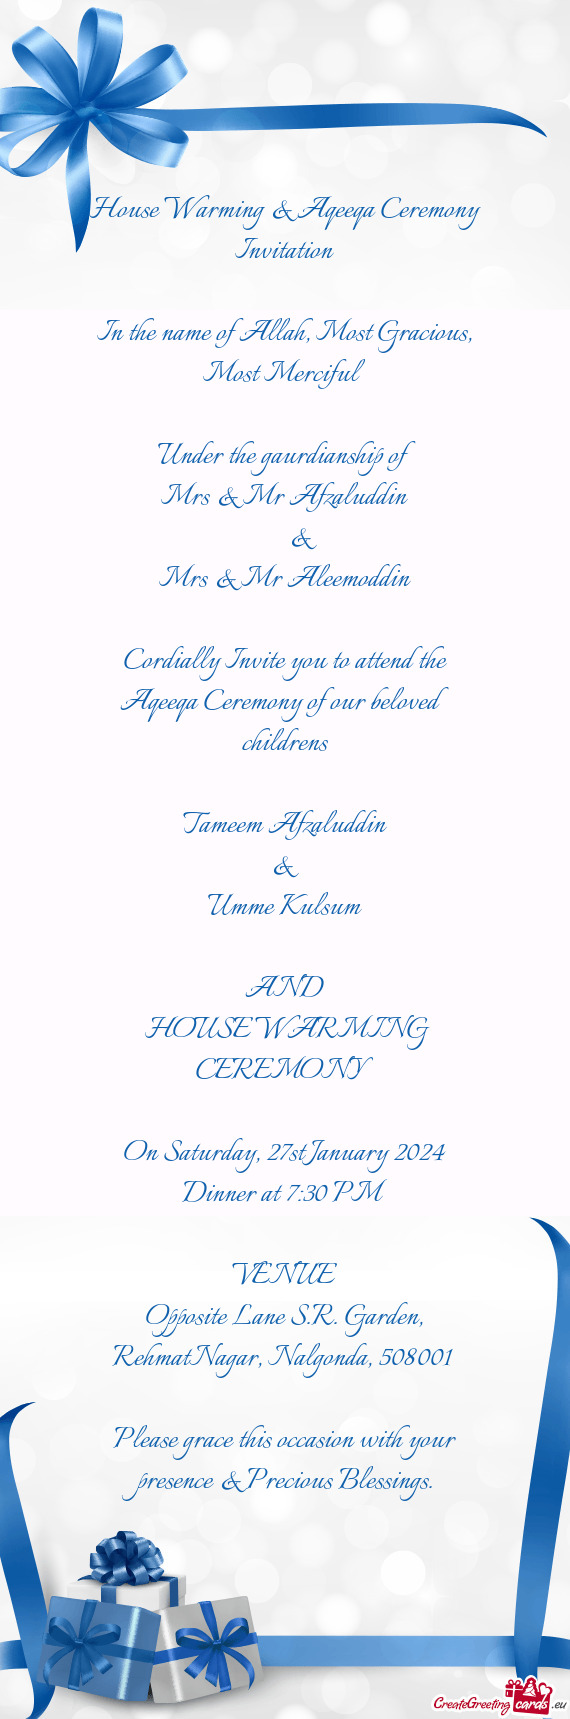 House Warming & Aqeeqa Ceremony Invitation